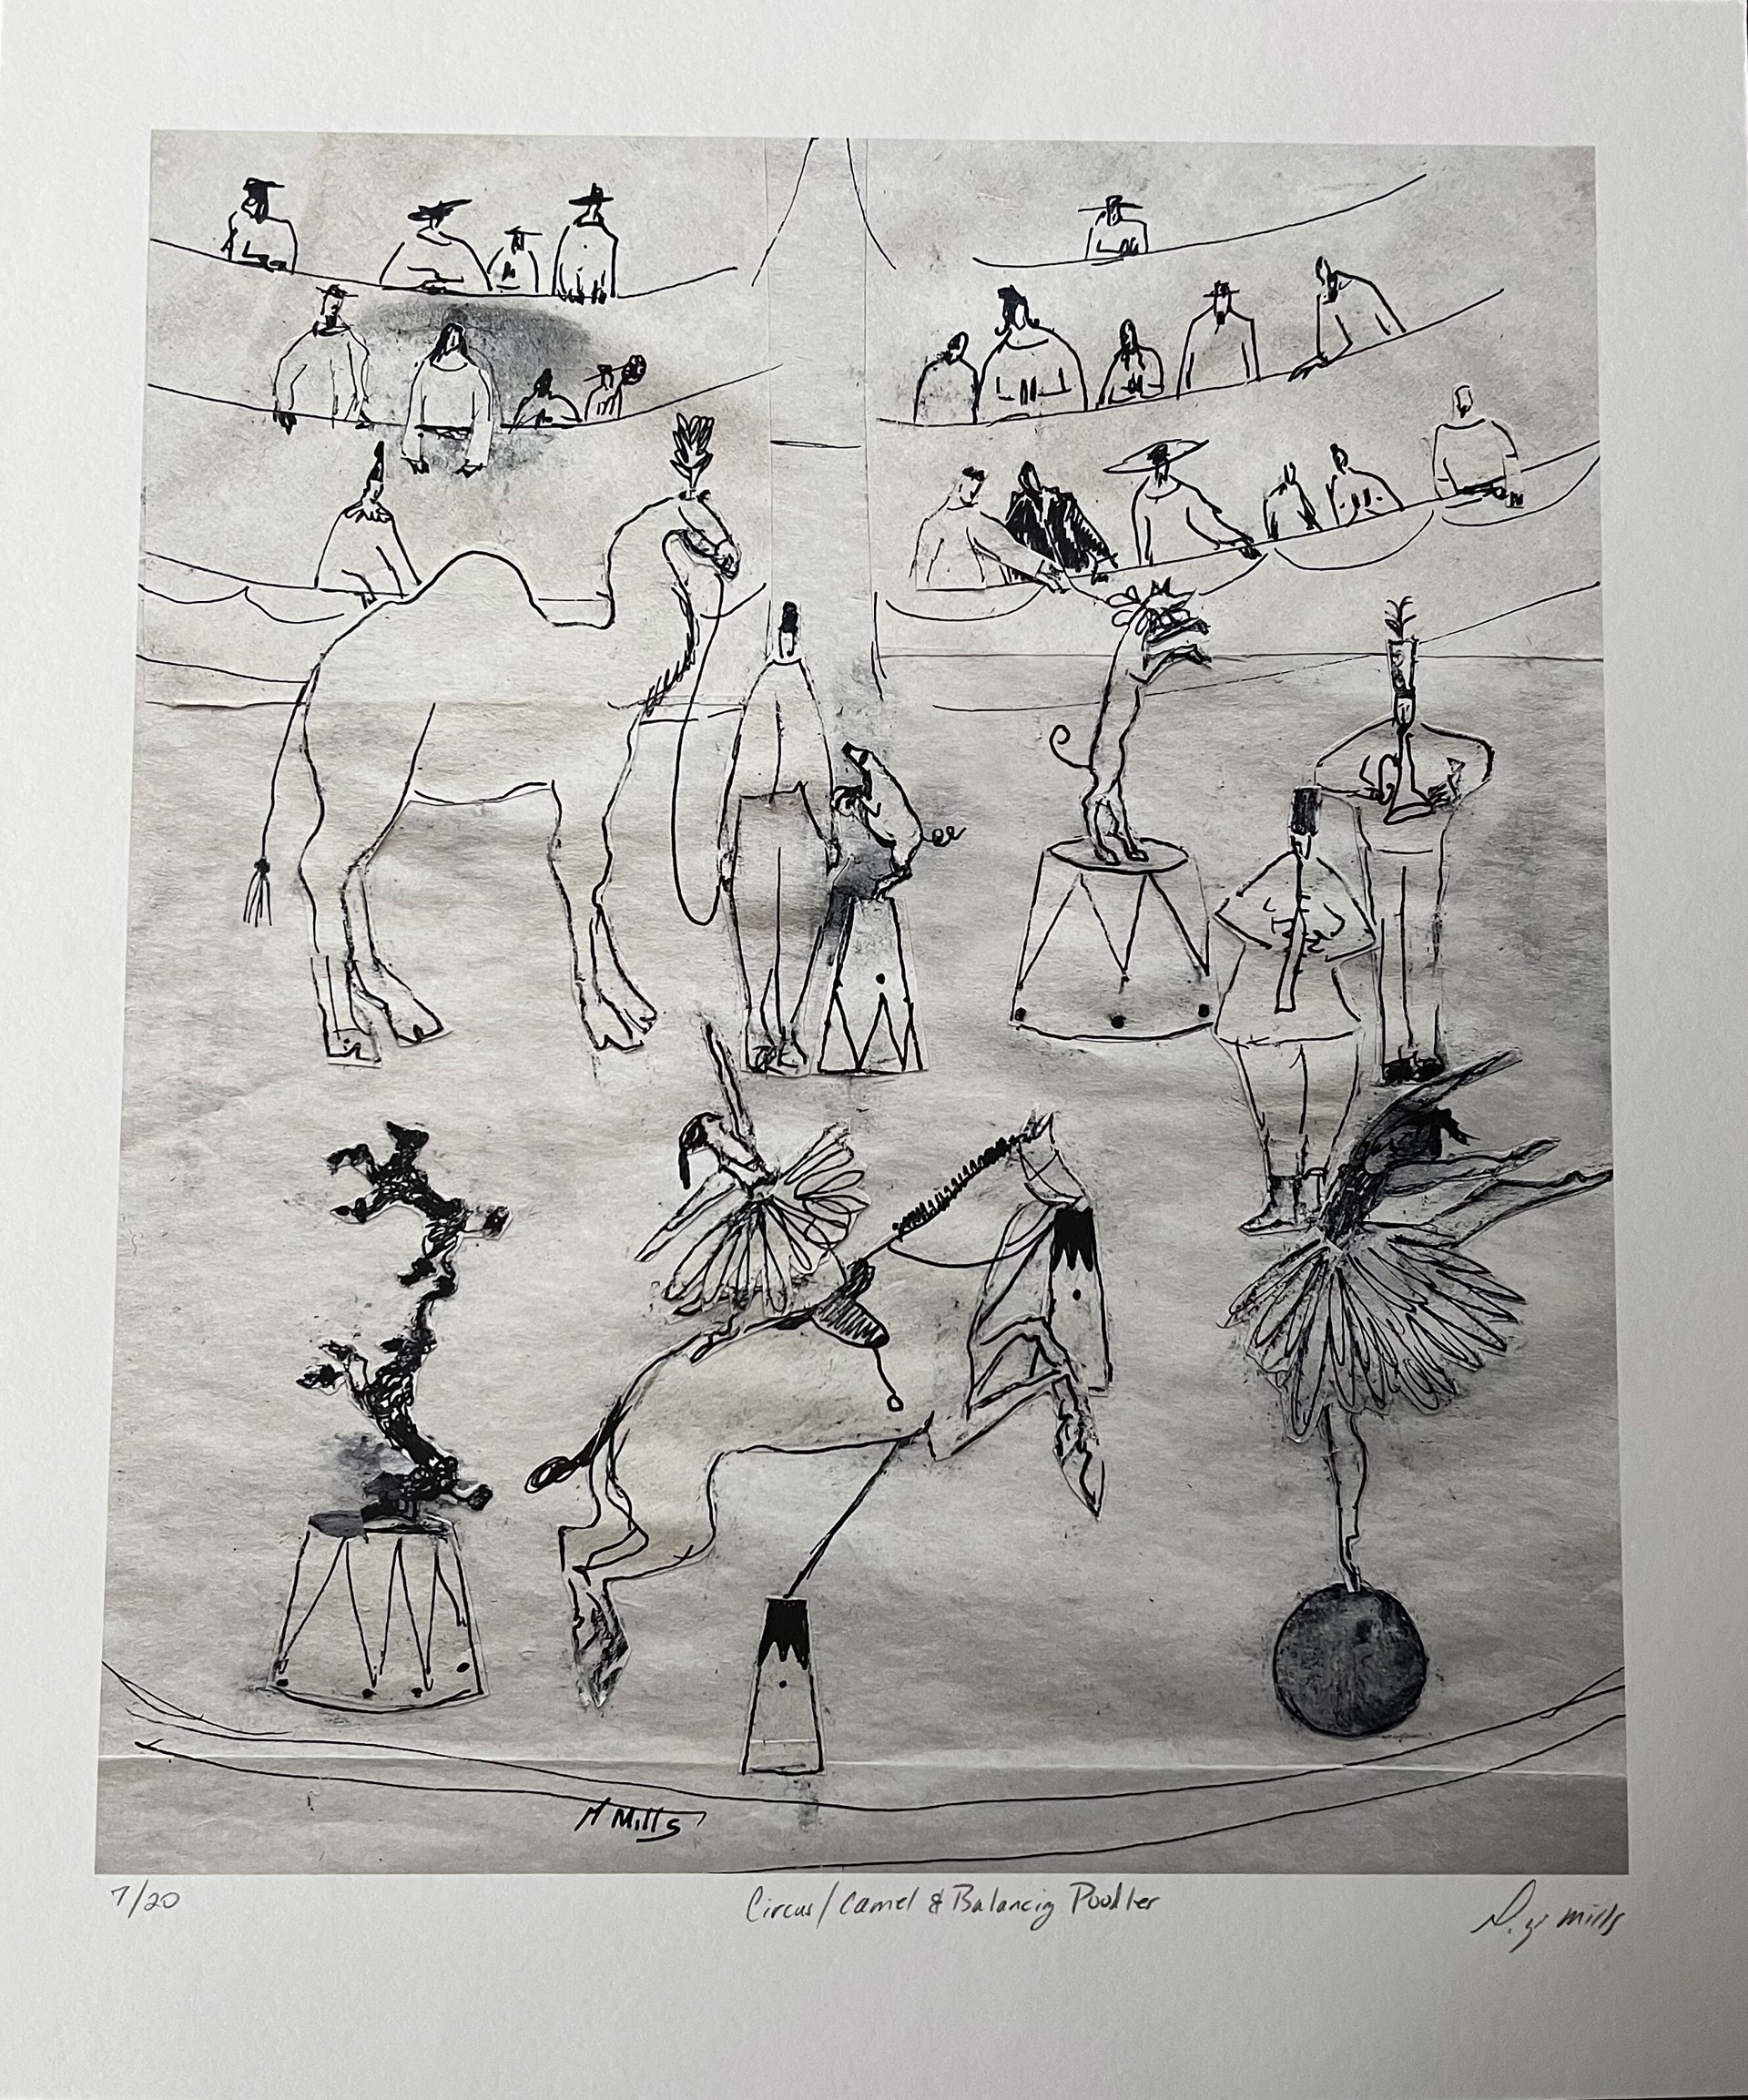 Circus/Camels and Balancing Poodles by Gigi Prints